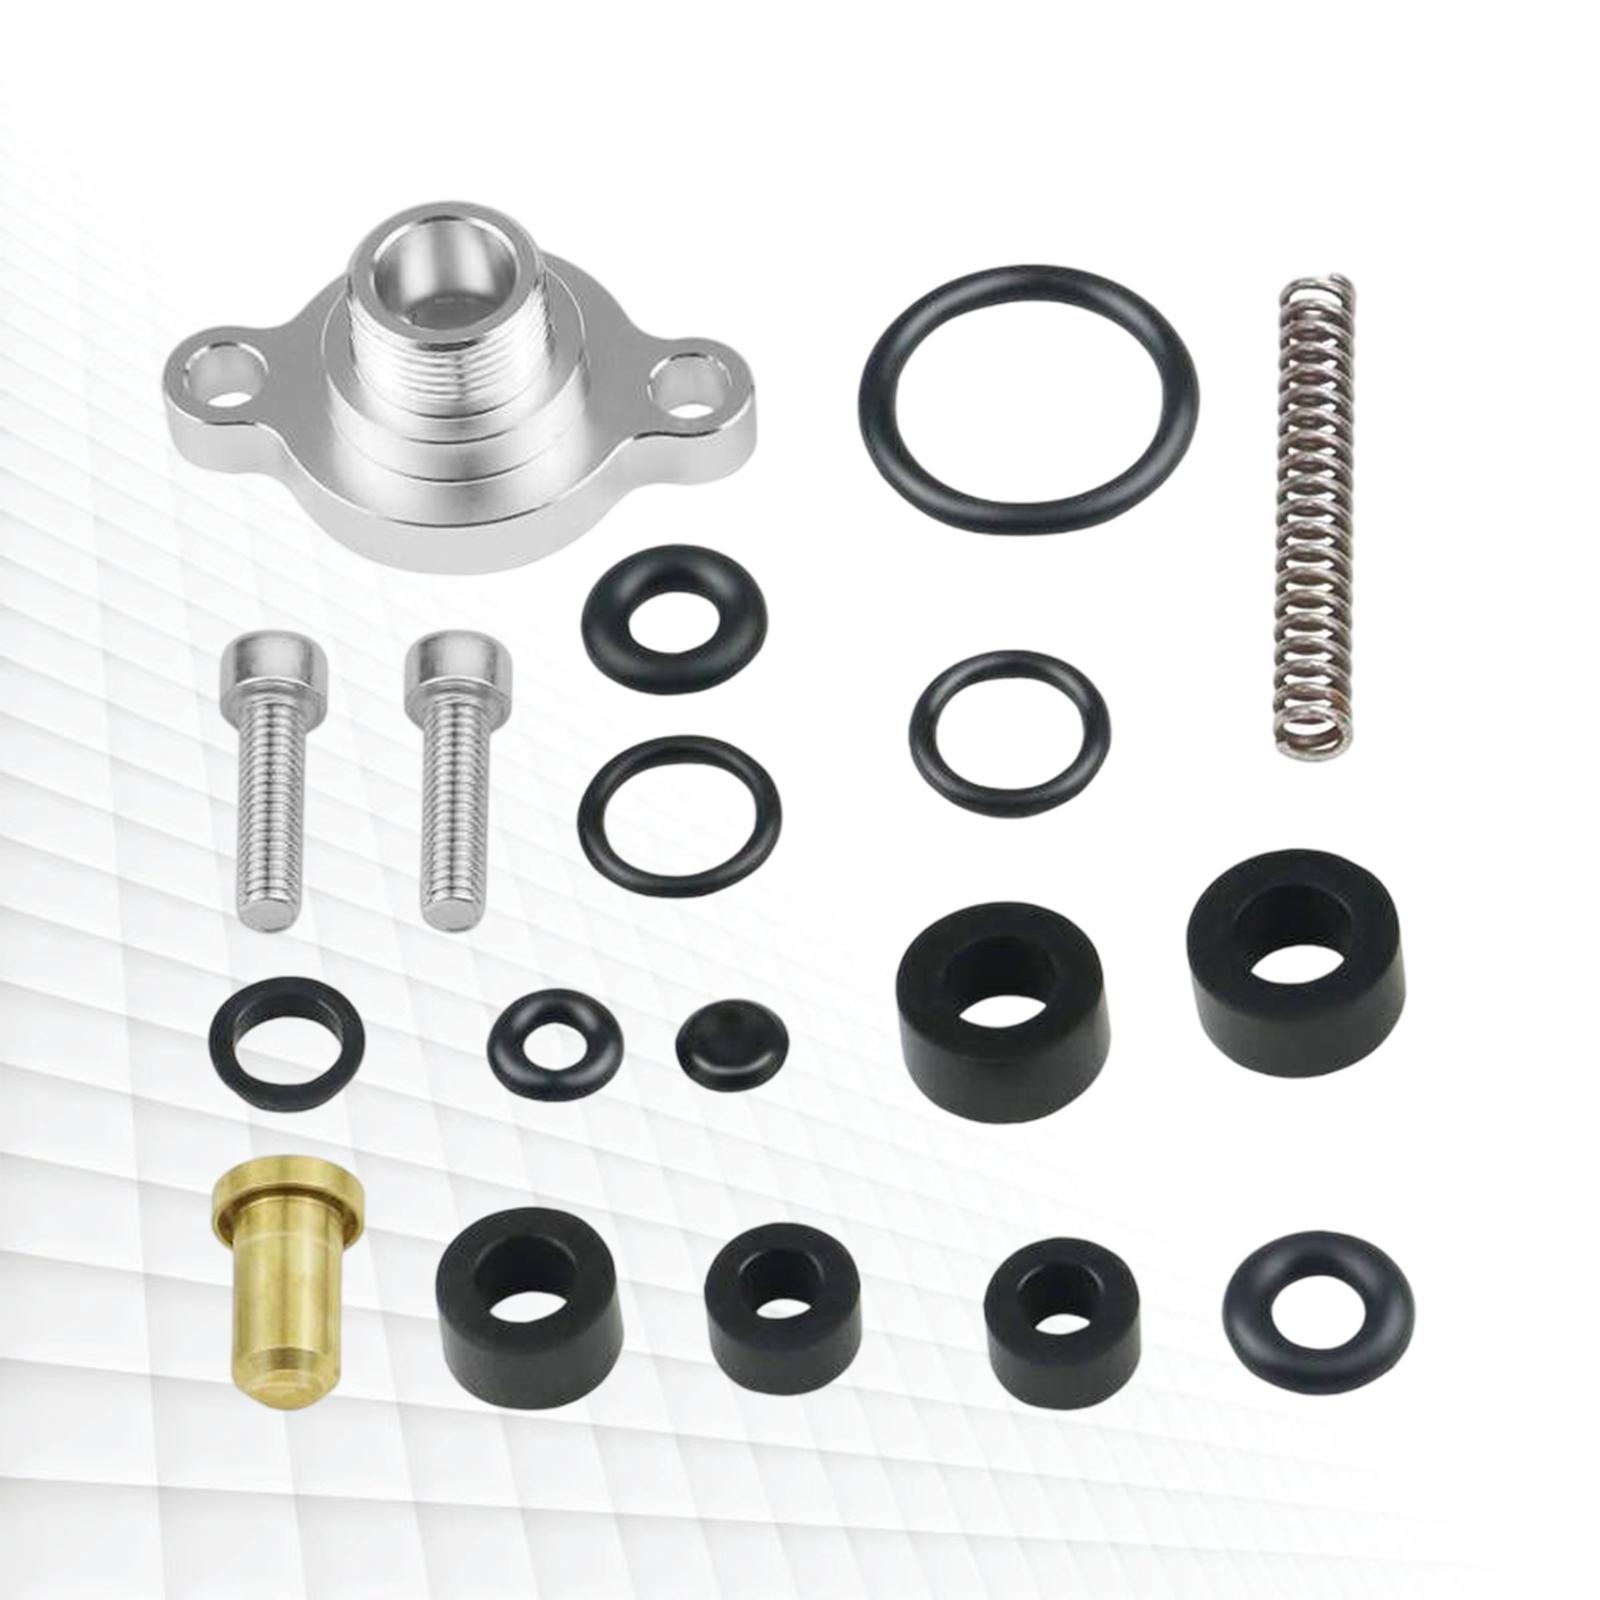 Fuel Pressure Regulator Engine Parts Fit for Ford Automotive Parts Durable